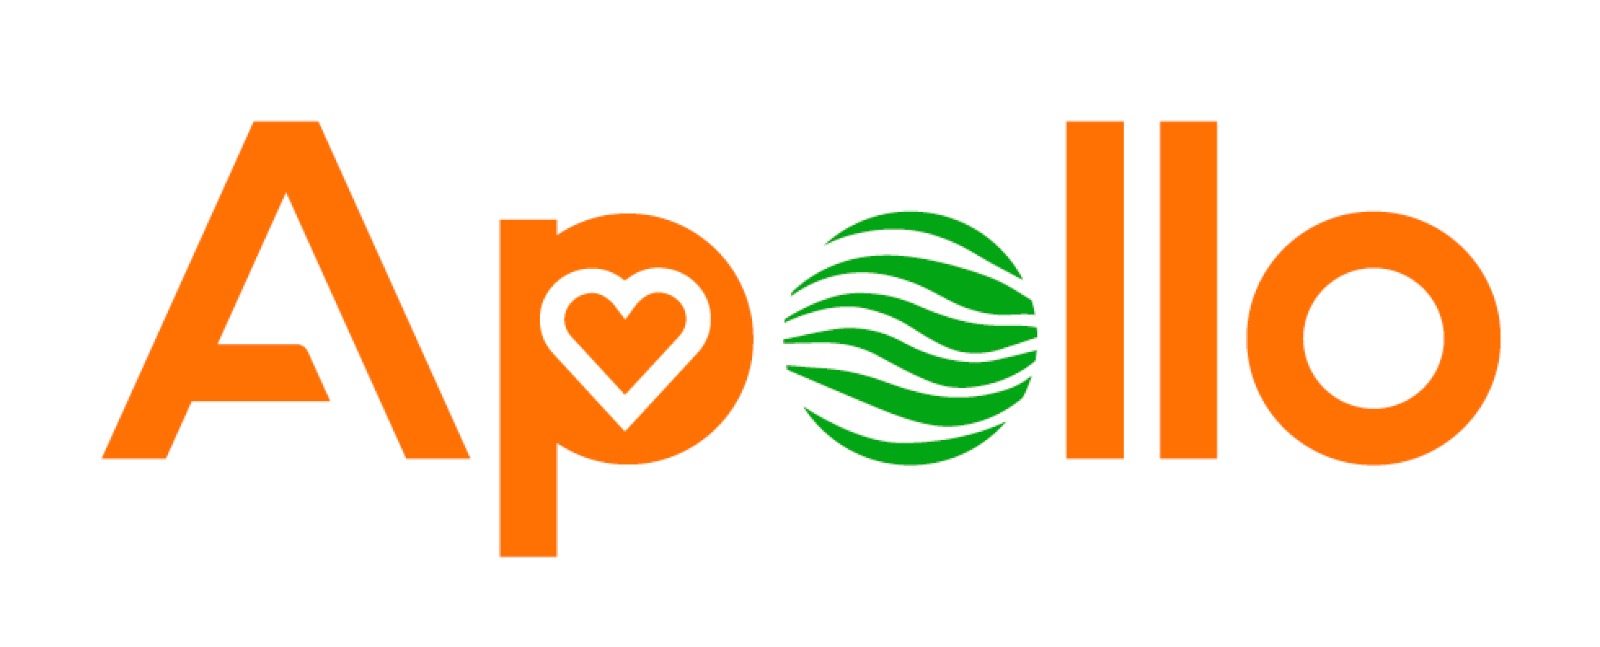 Company logo for Apollo Healthcare Resources